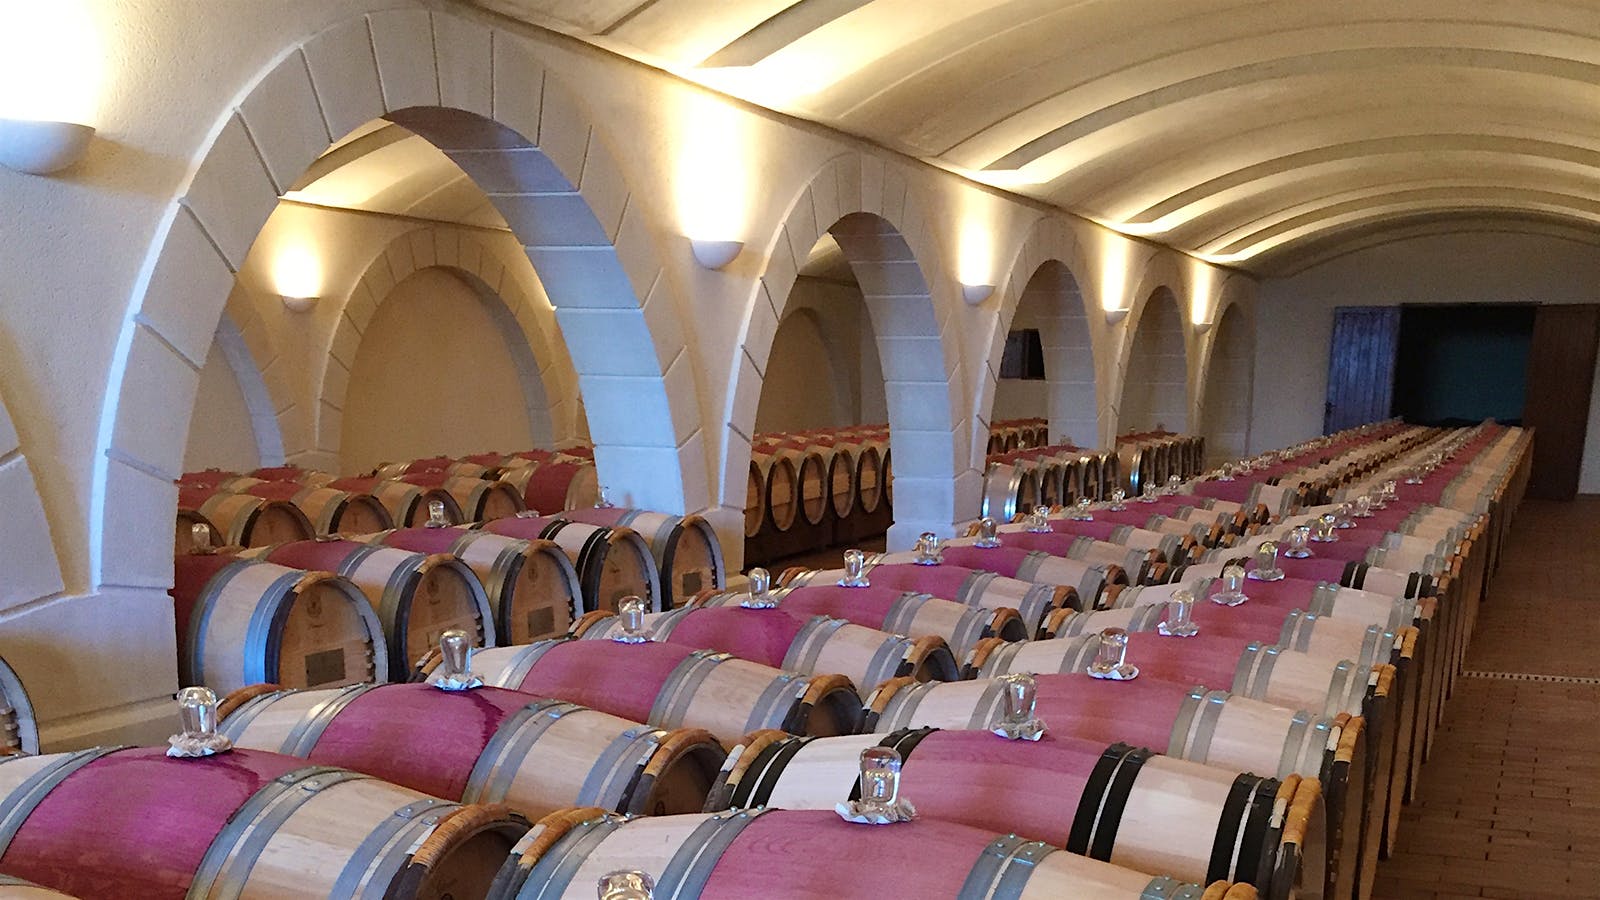 The 2015 Bordeaux Barrels Diary: Mr. Clean